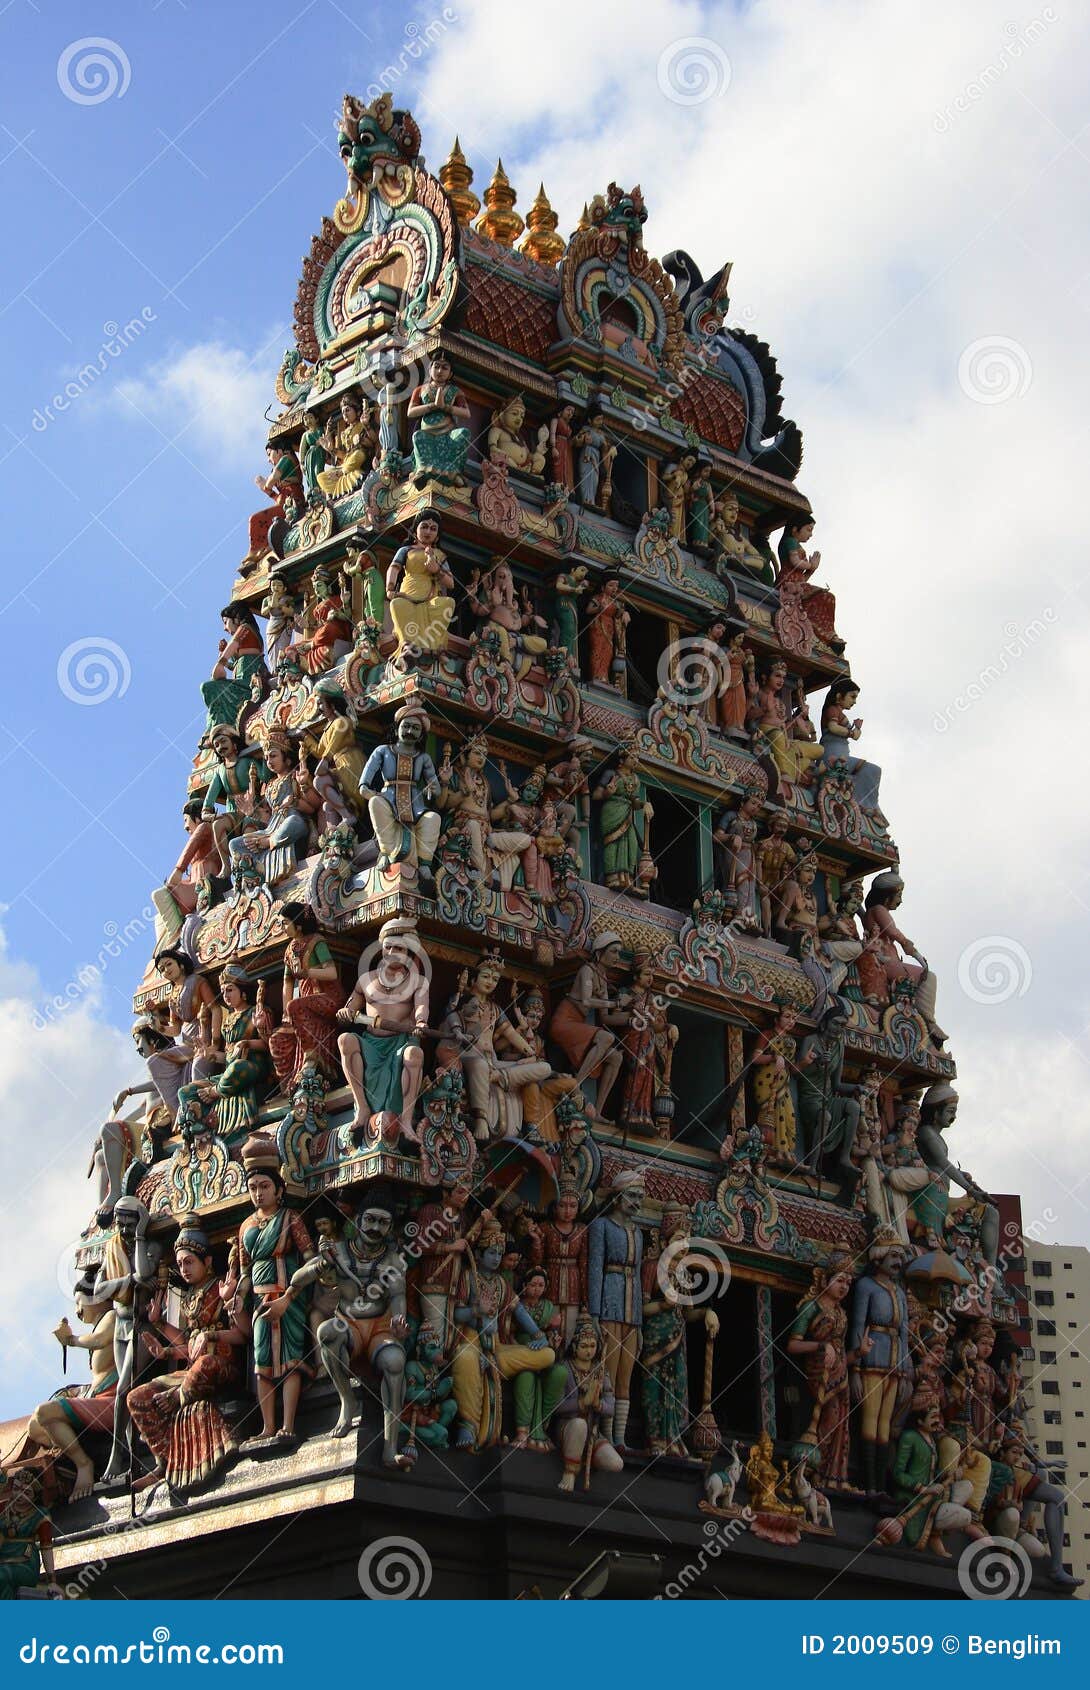 http://thumbs.dreamstime.com/z/hindu-statue-pagoda-2009509.jpg